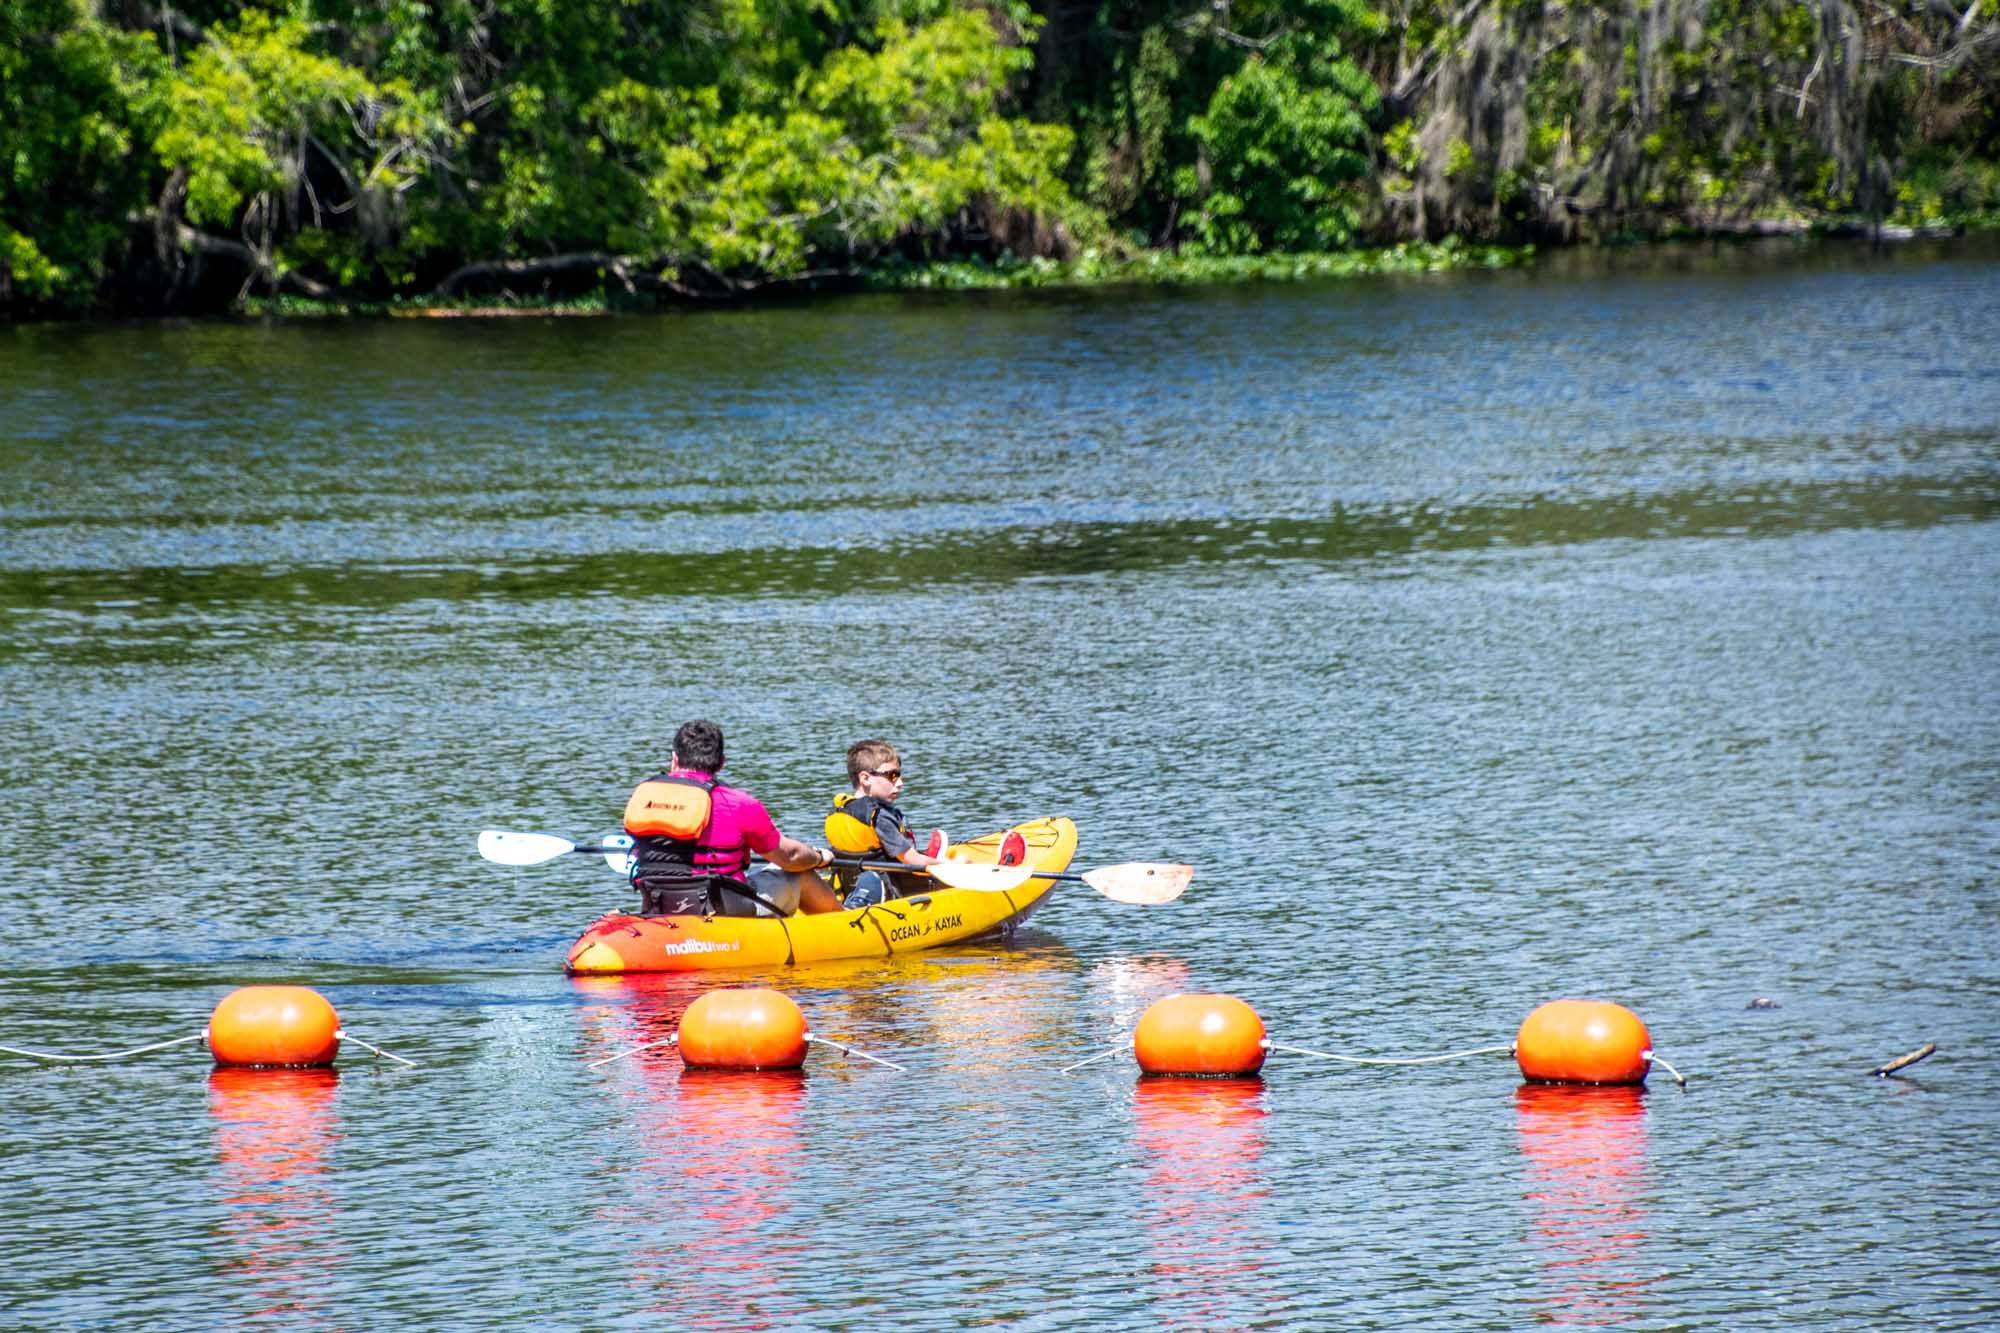 Two people in yellow kayak near orange bouys